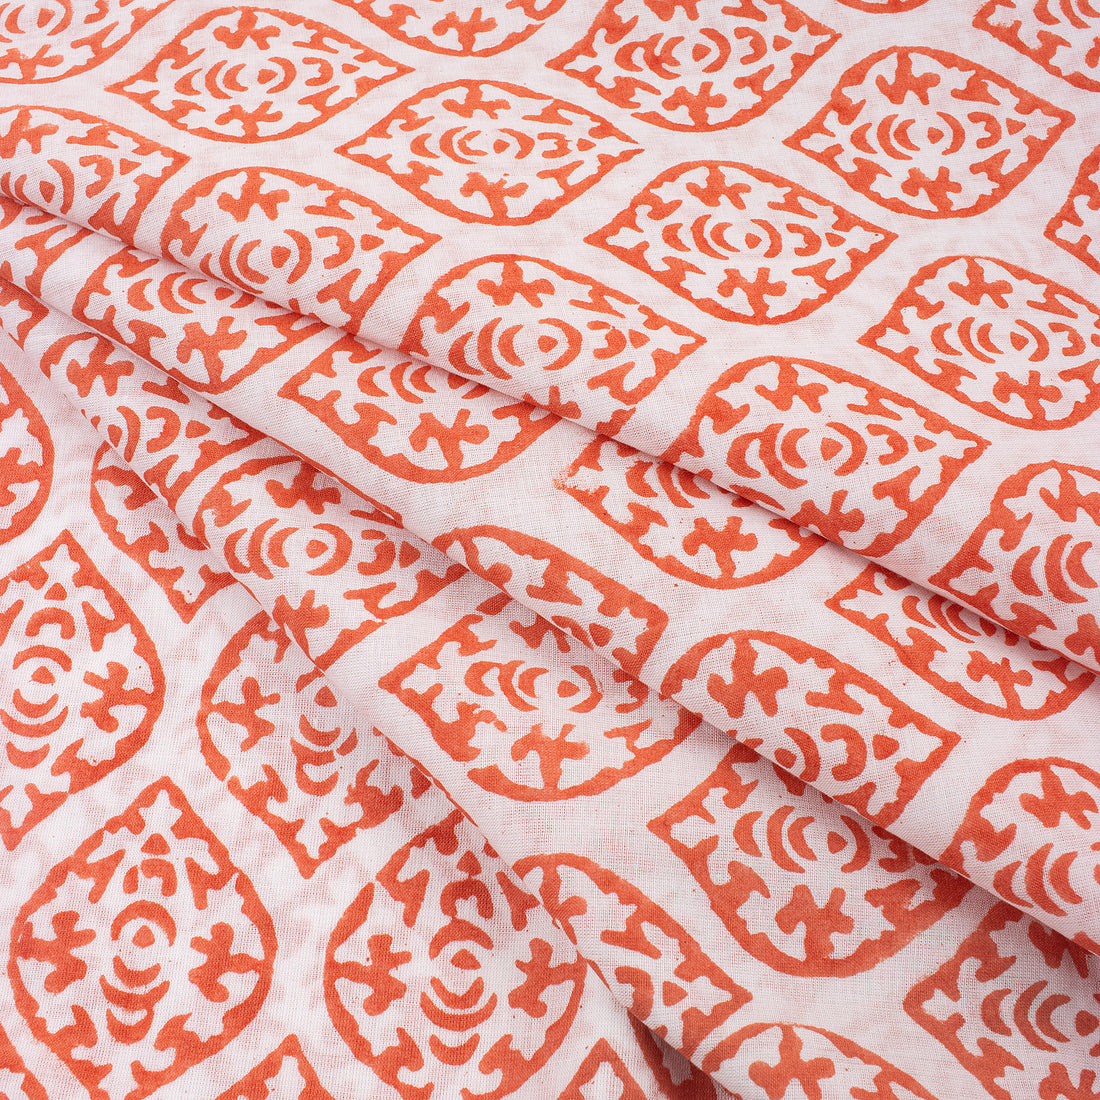 Jaipuri Block Print Fabric